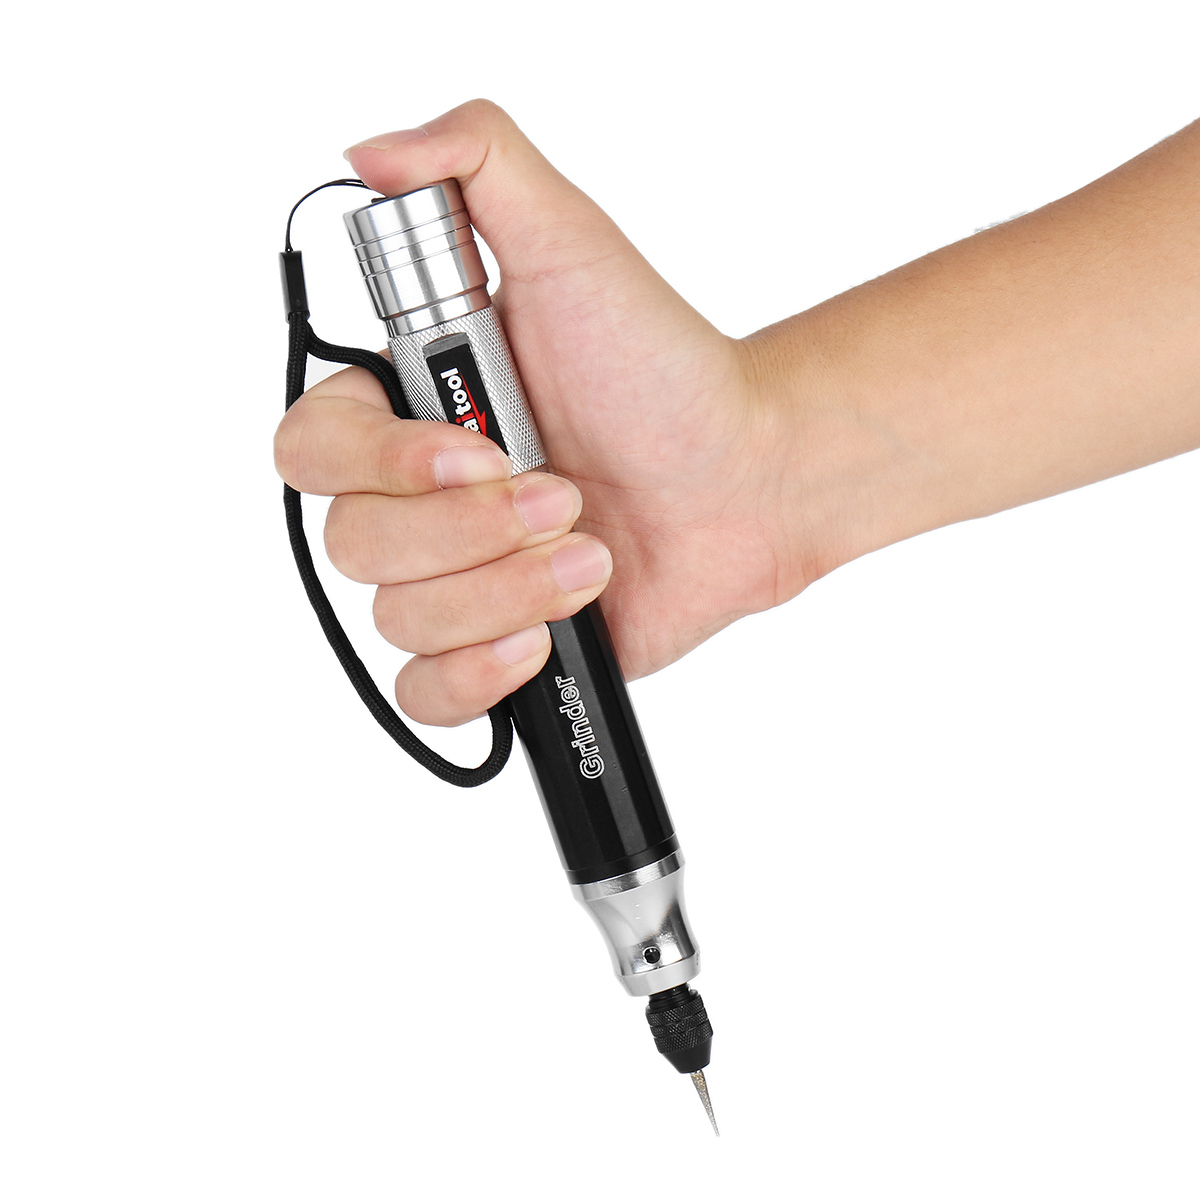 Raitool™ 3.7V 35W Mini Power Drills Electric Grinder Cordless Engraving Pen 47